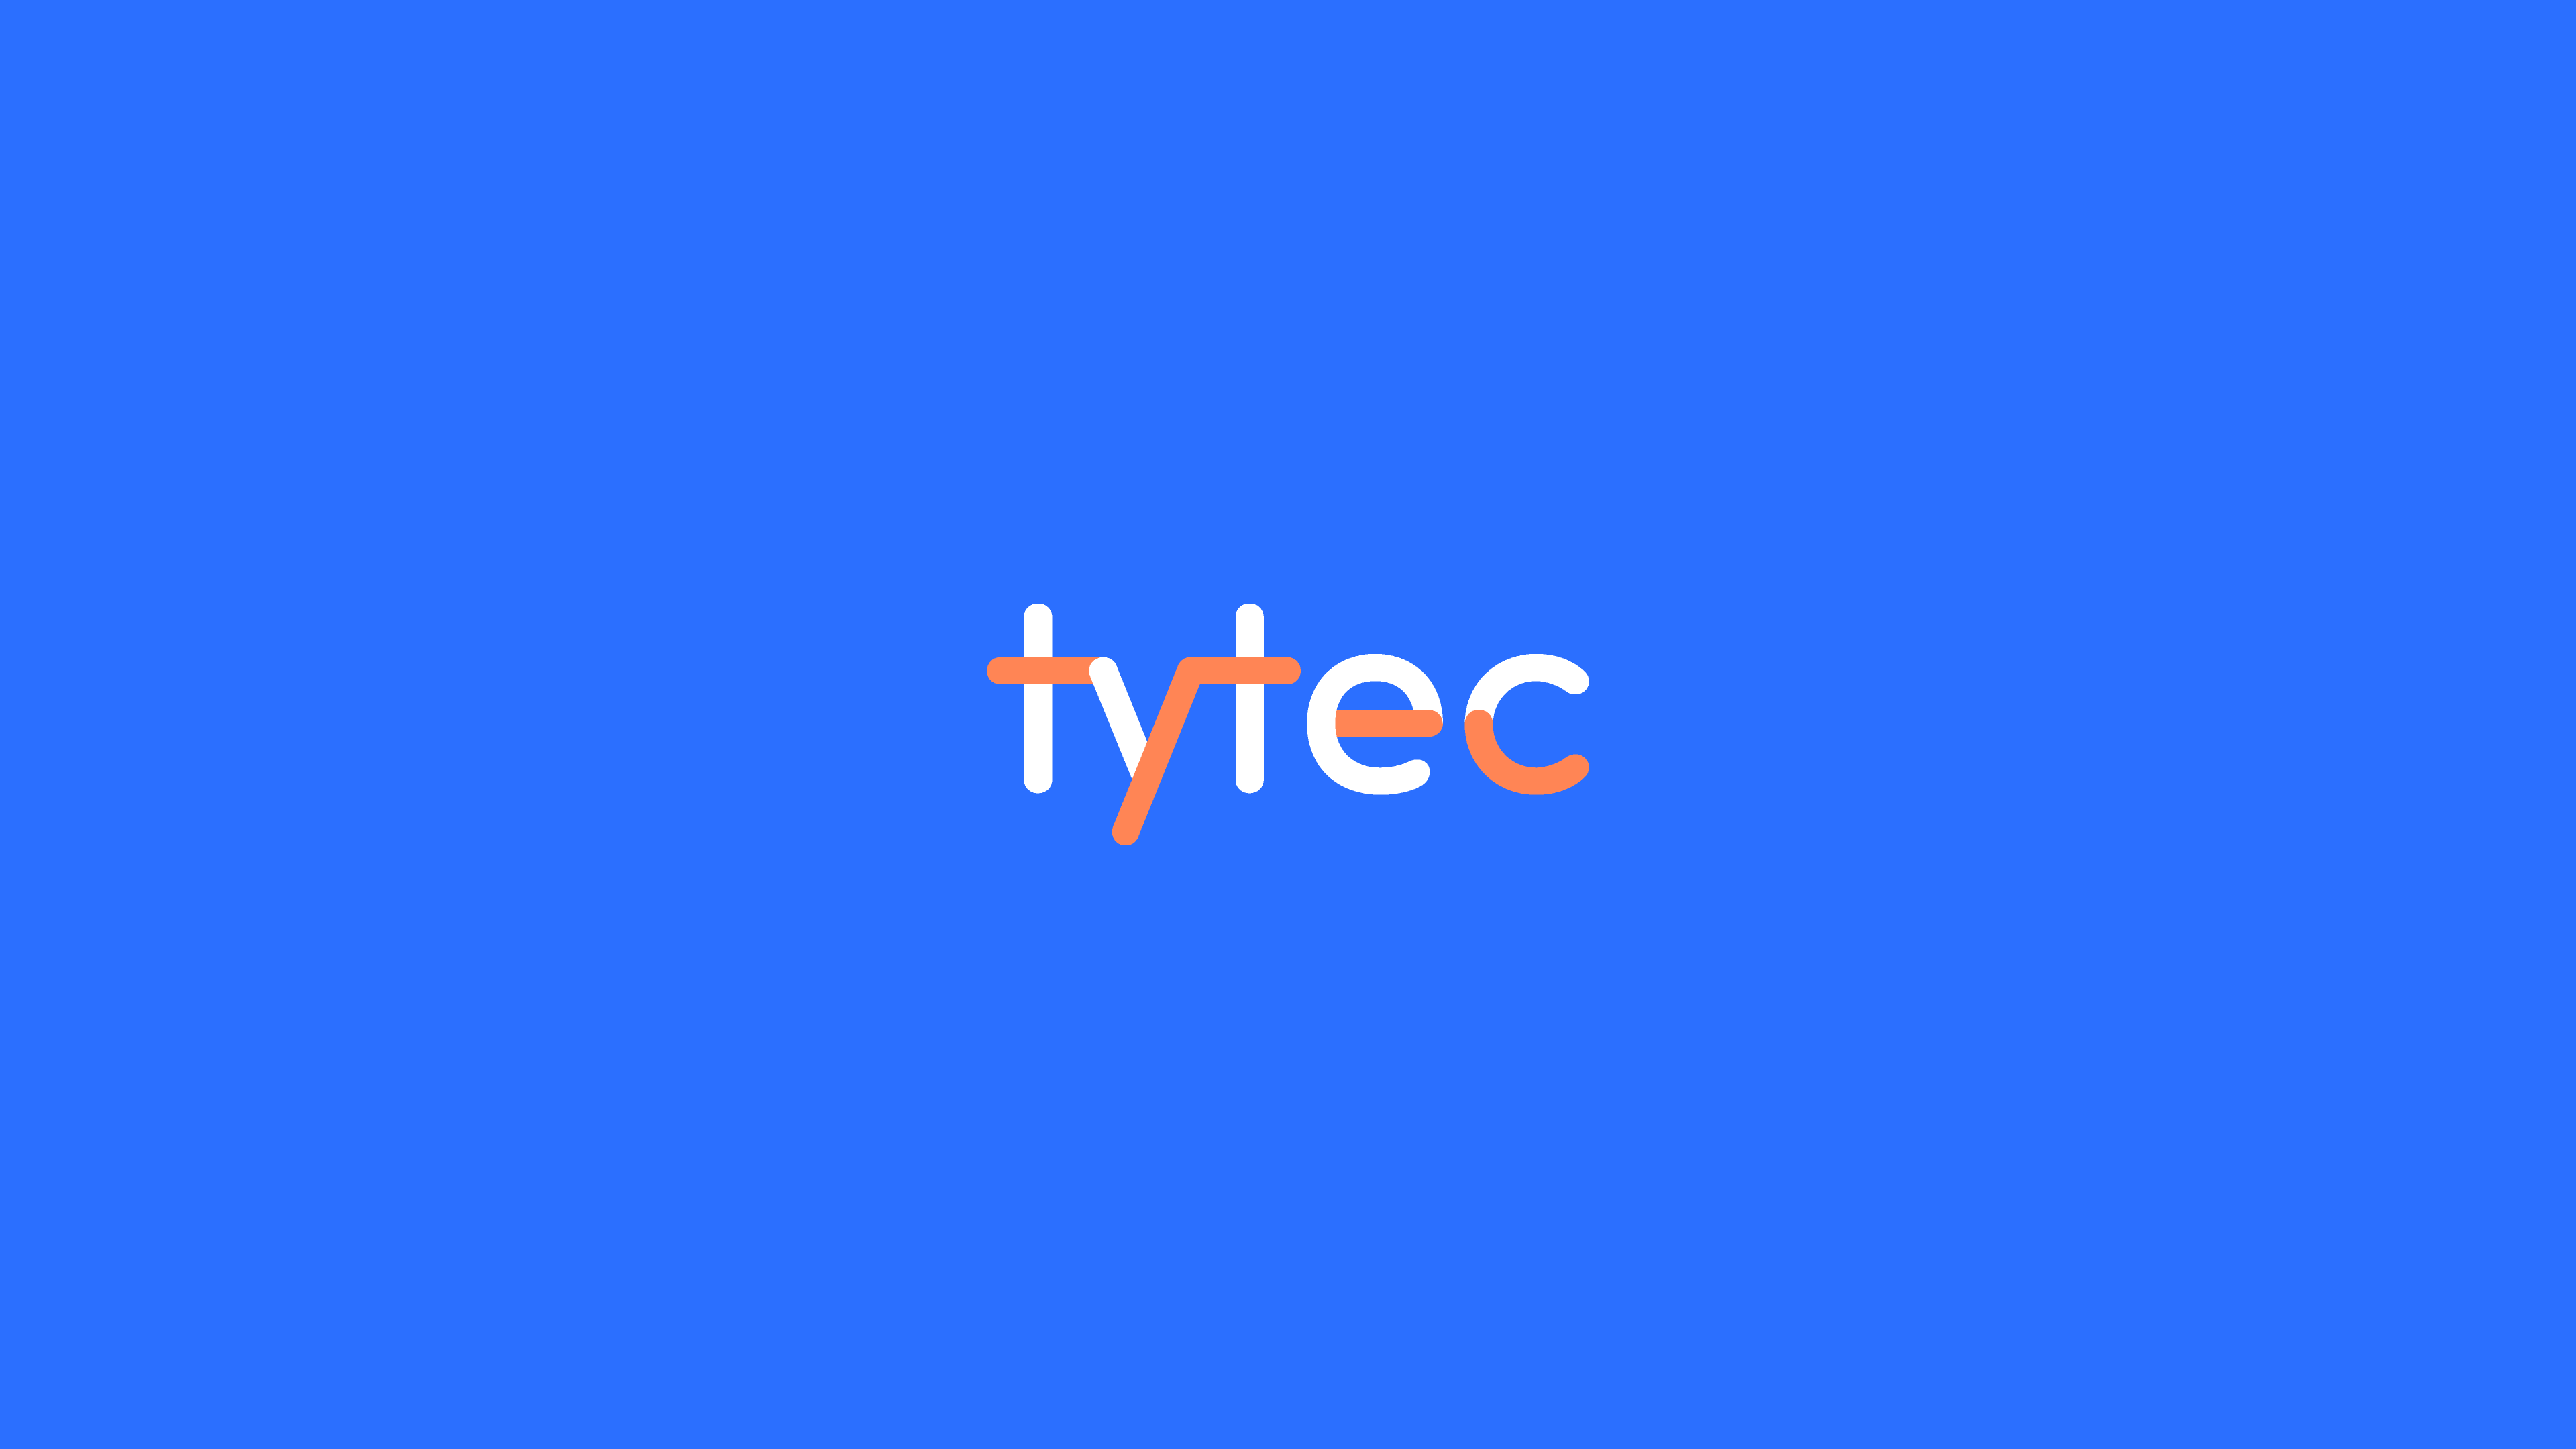 Tytec - The Codeine Design